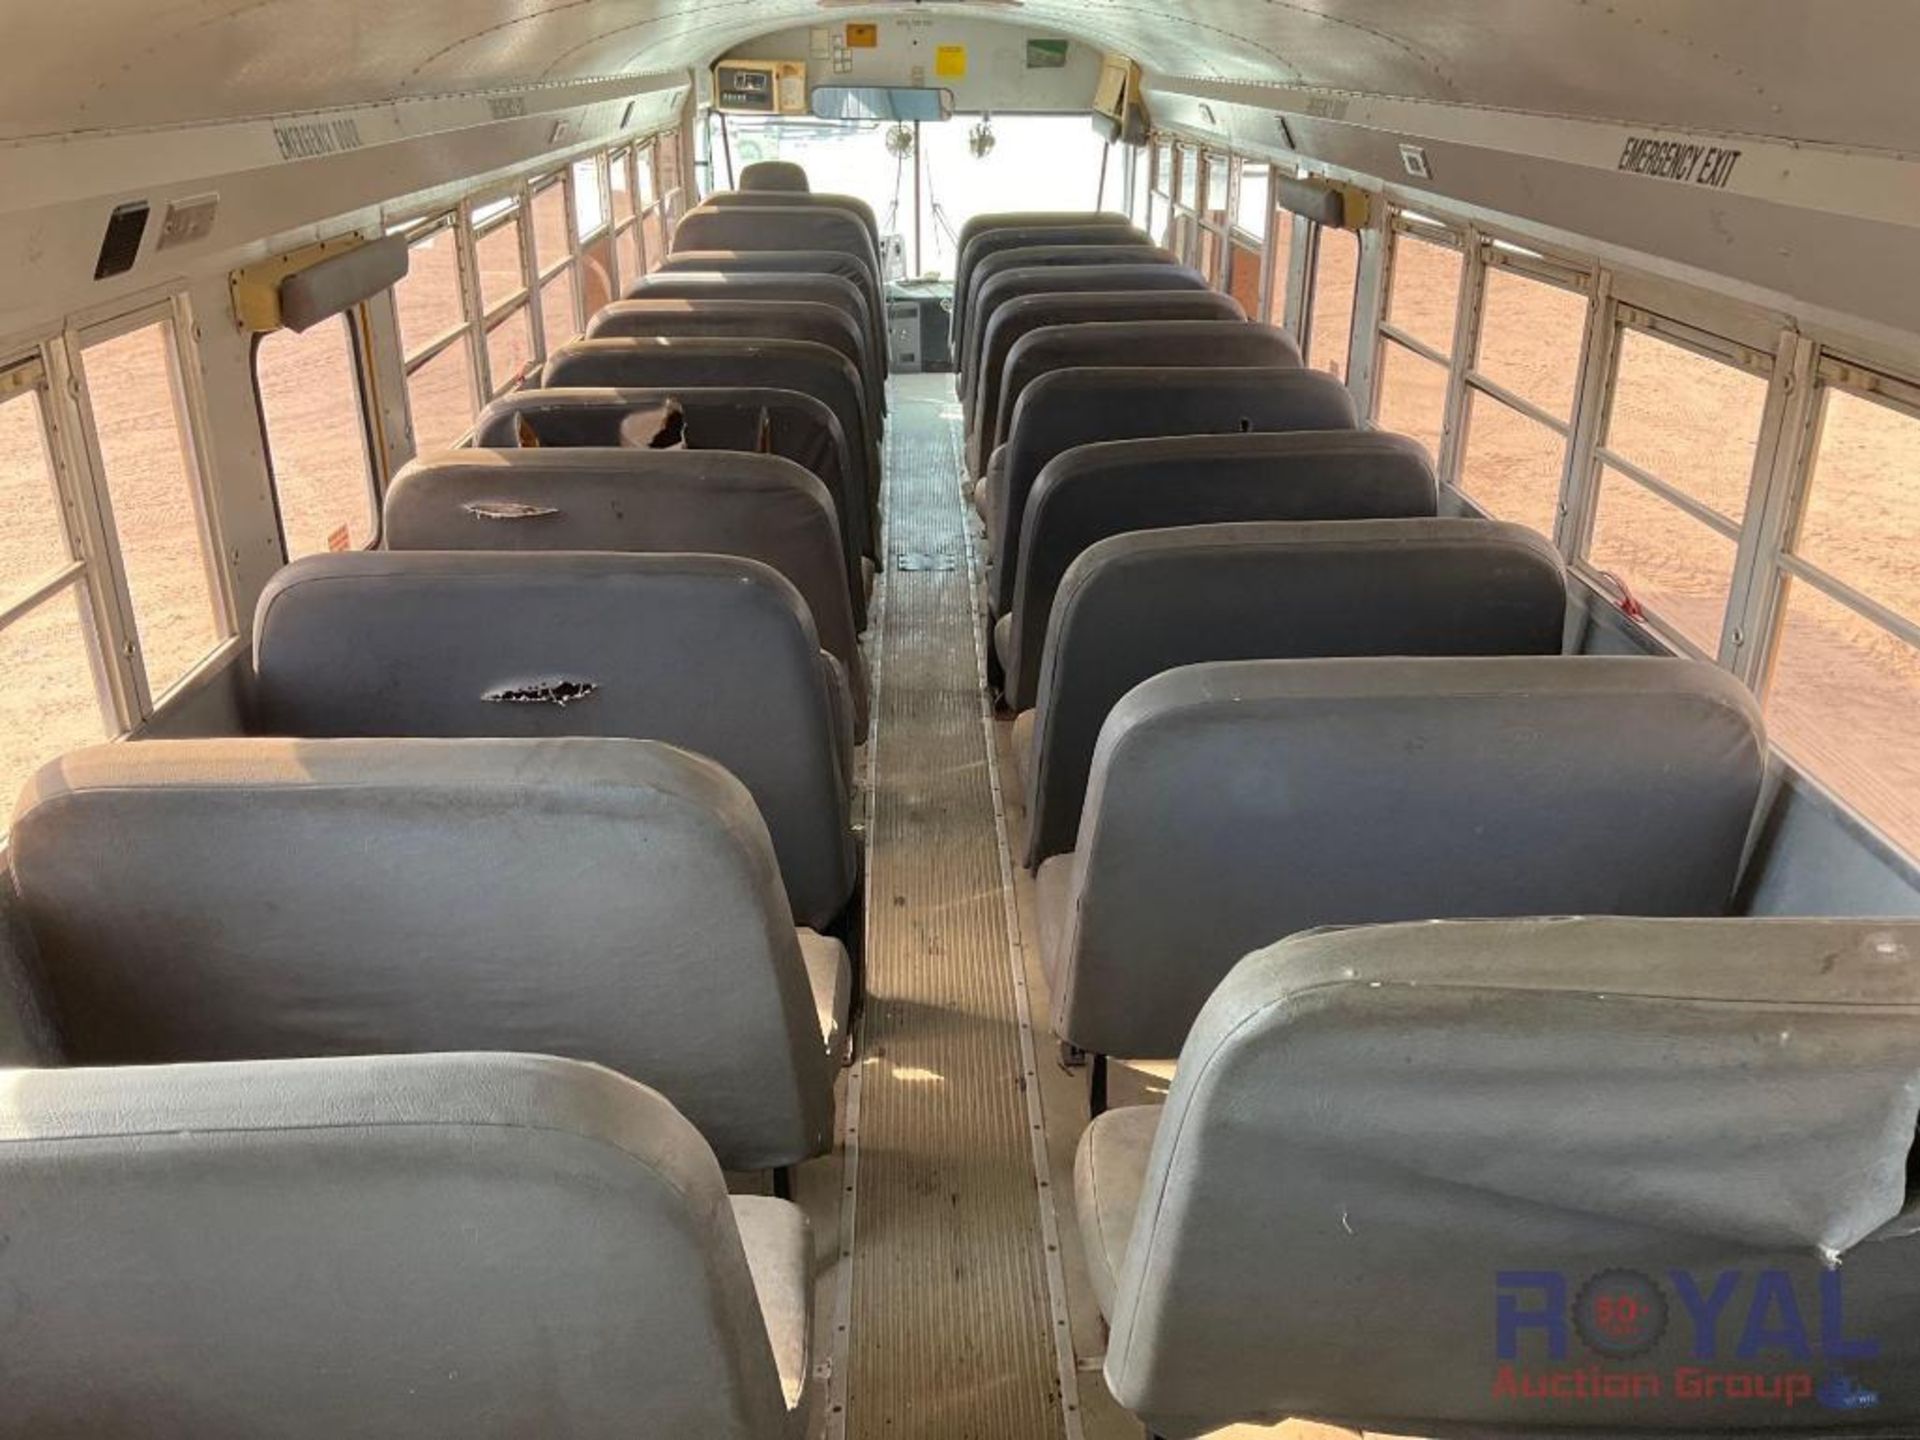 2000 International RE3000 School Bus - Image 11 of 20